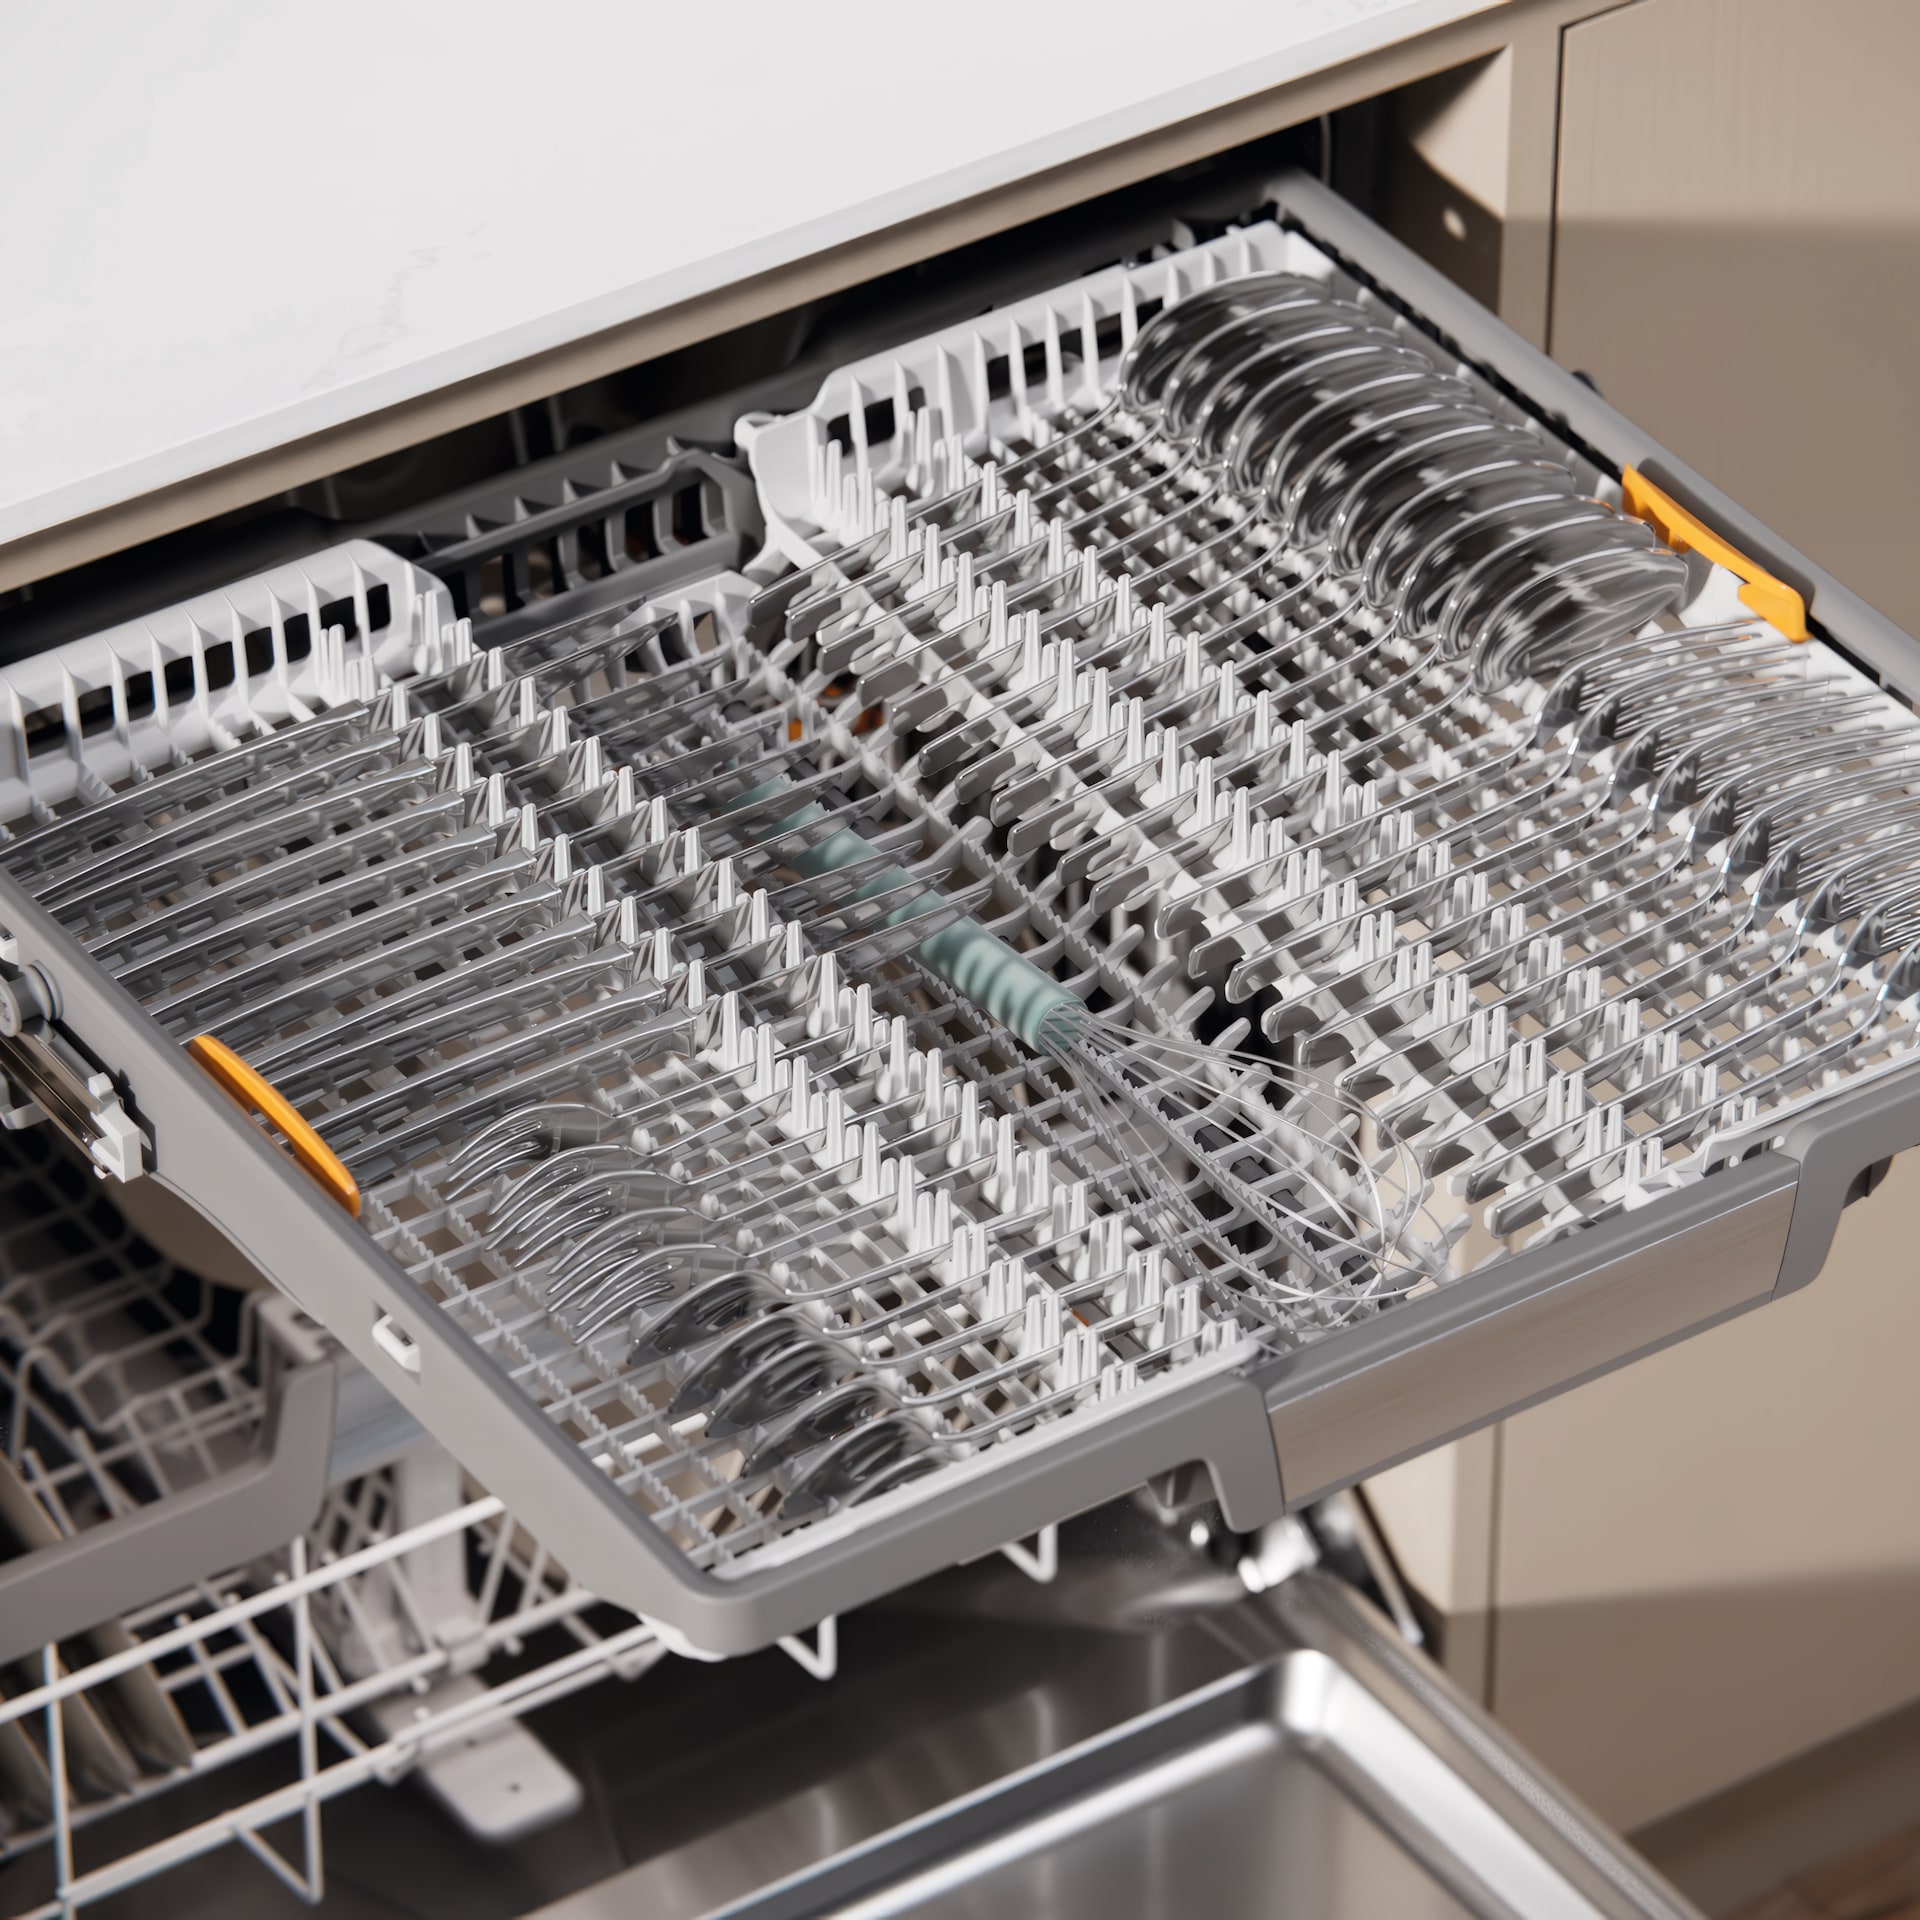 Miele - G 7160 SCVi AutoDos Stainless Steel. – Dishwashers